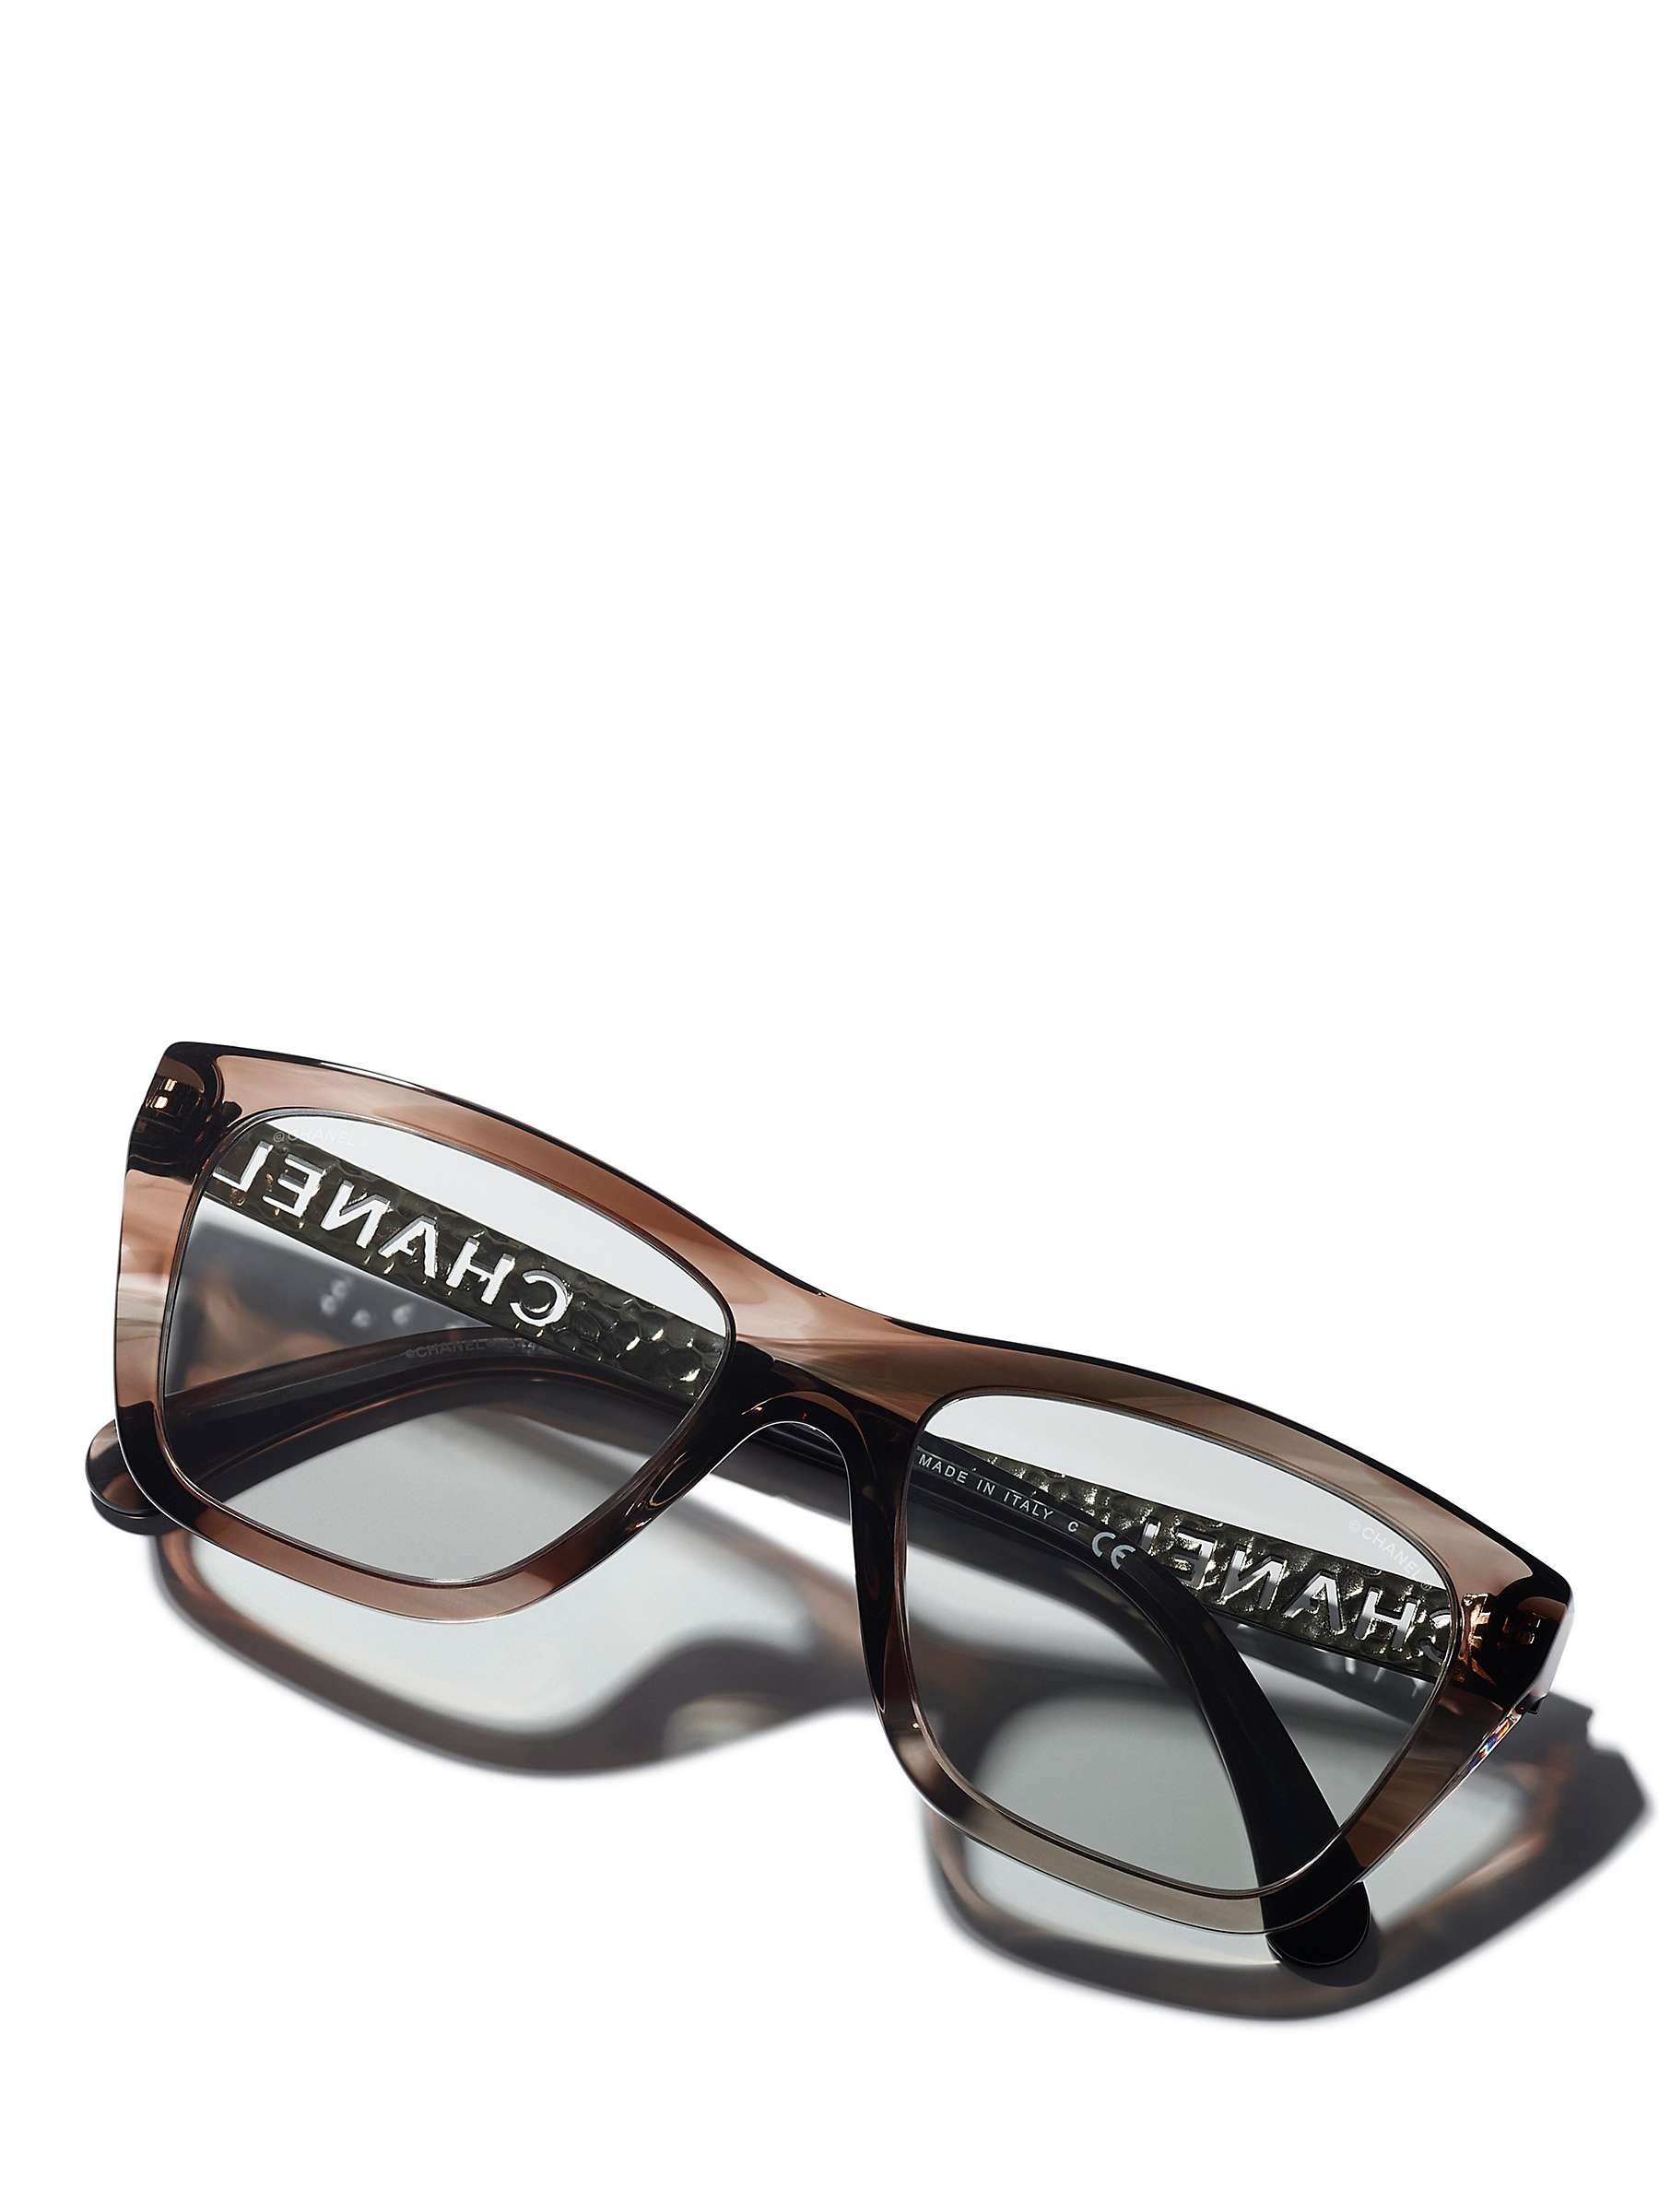 Buy CHANEL Rectangular Sunglasses CH5442 Striped Brown/Light Grey Online at johnlewis.com